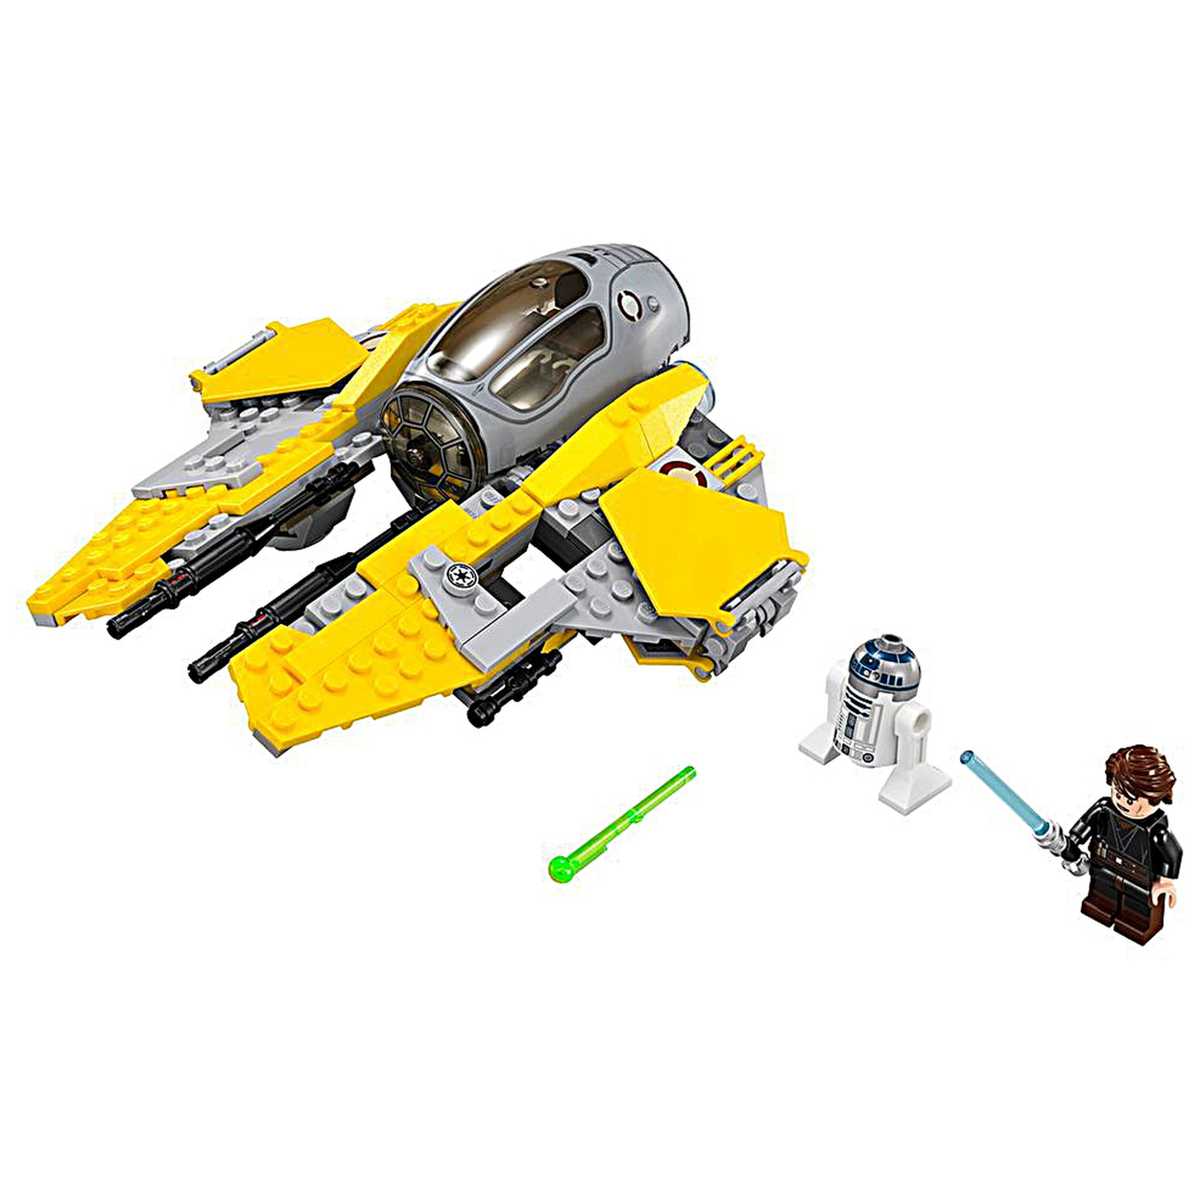  Set de constructie LEGO Star Wars - Jedi Interceptor 75038 